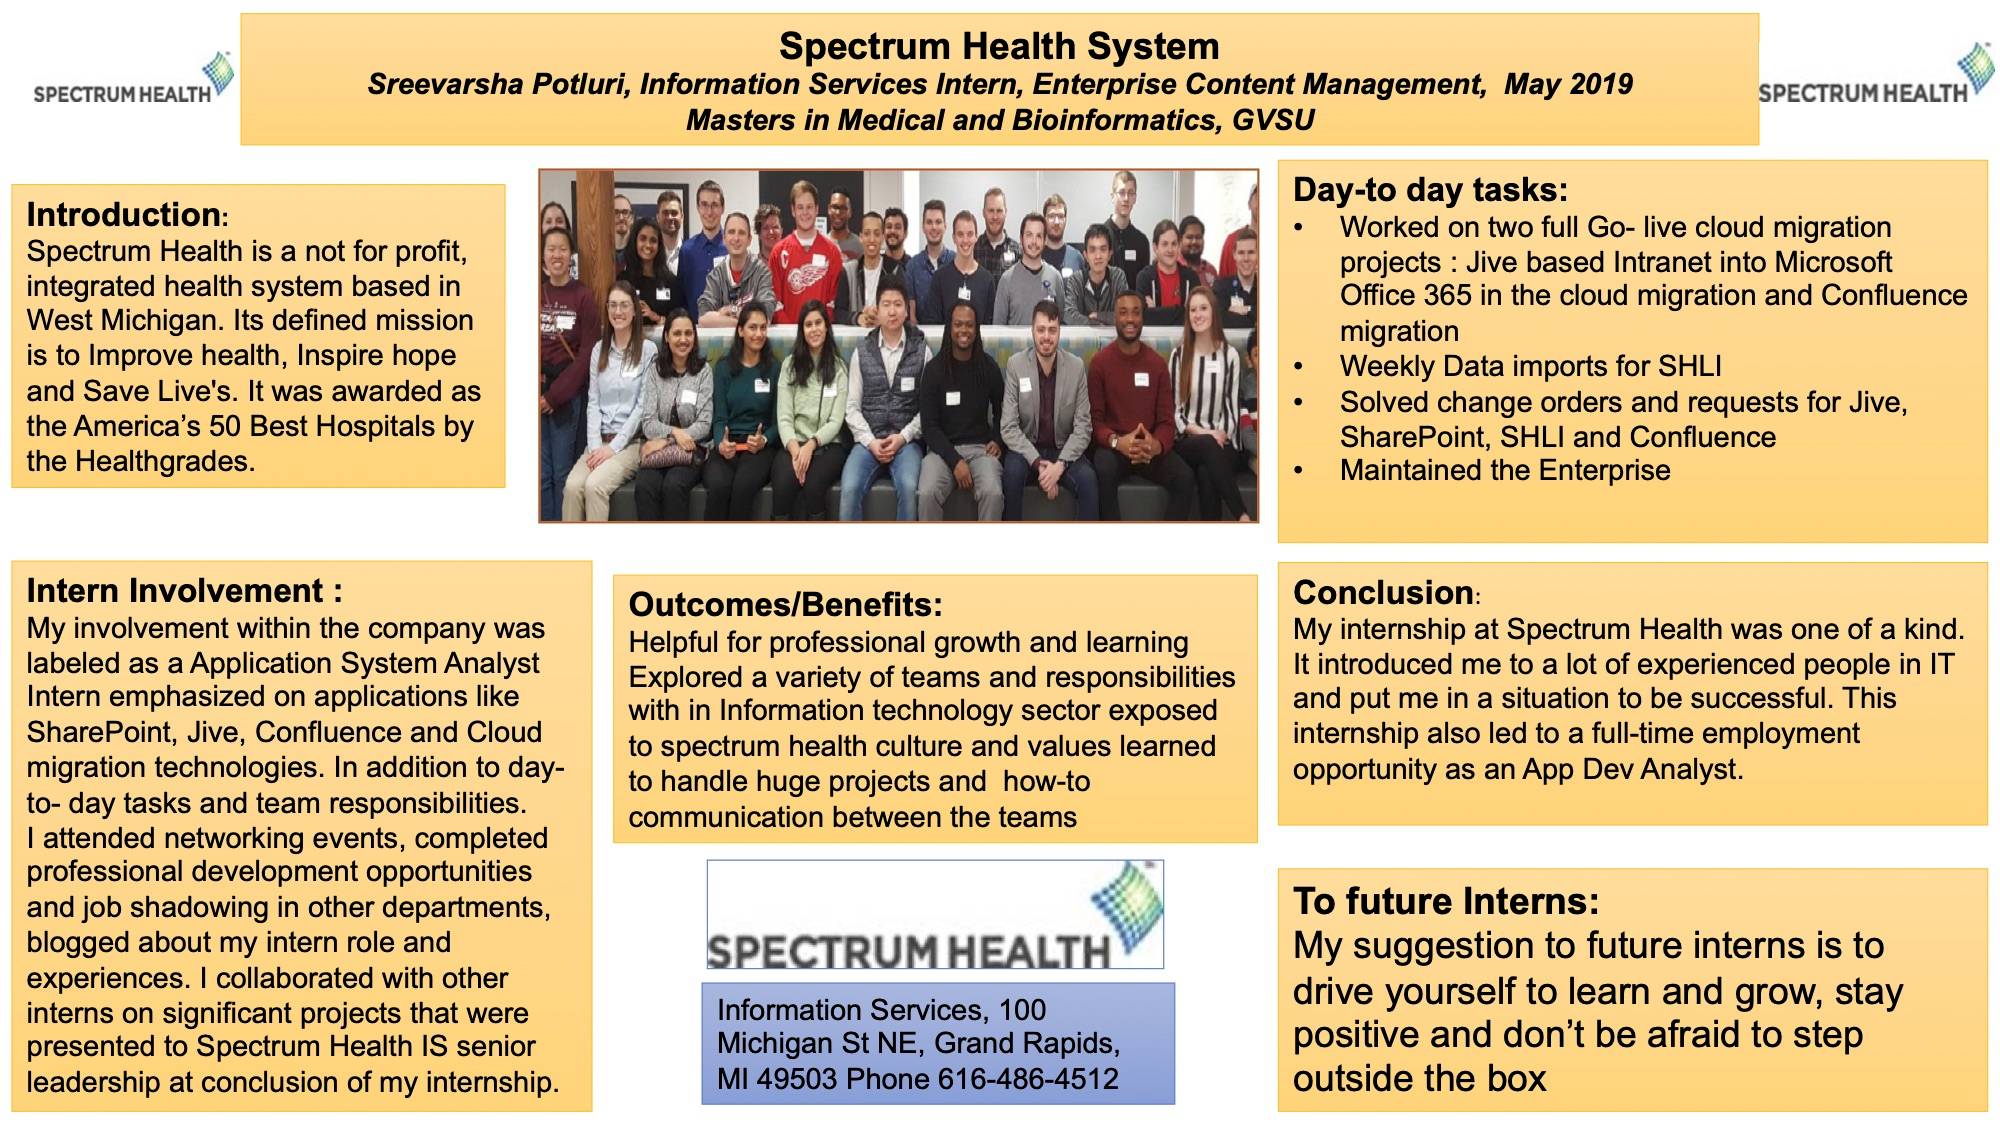 Sreevarsha Potluri, Spectrum Health- Enterprise Content Management May 2019.